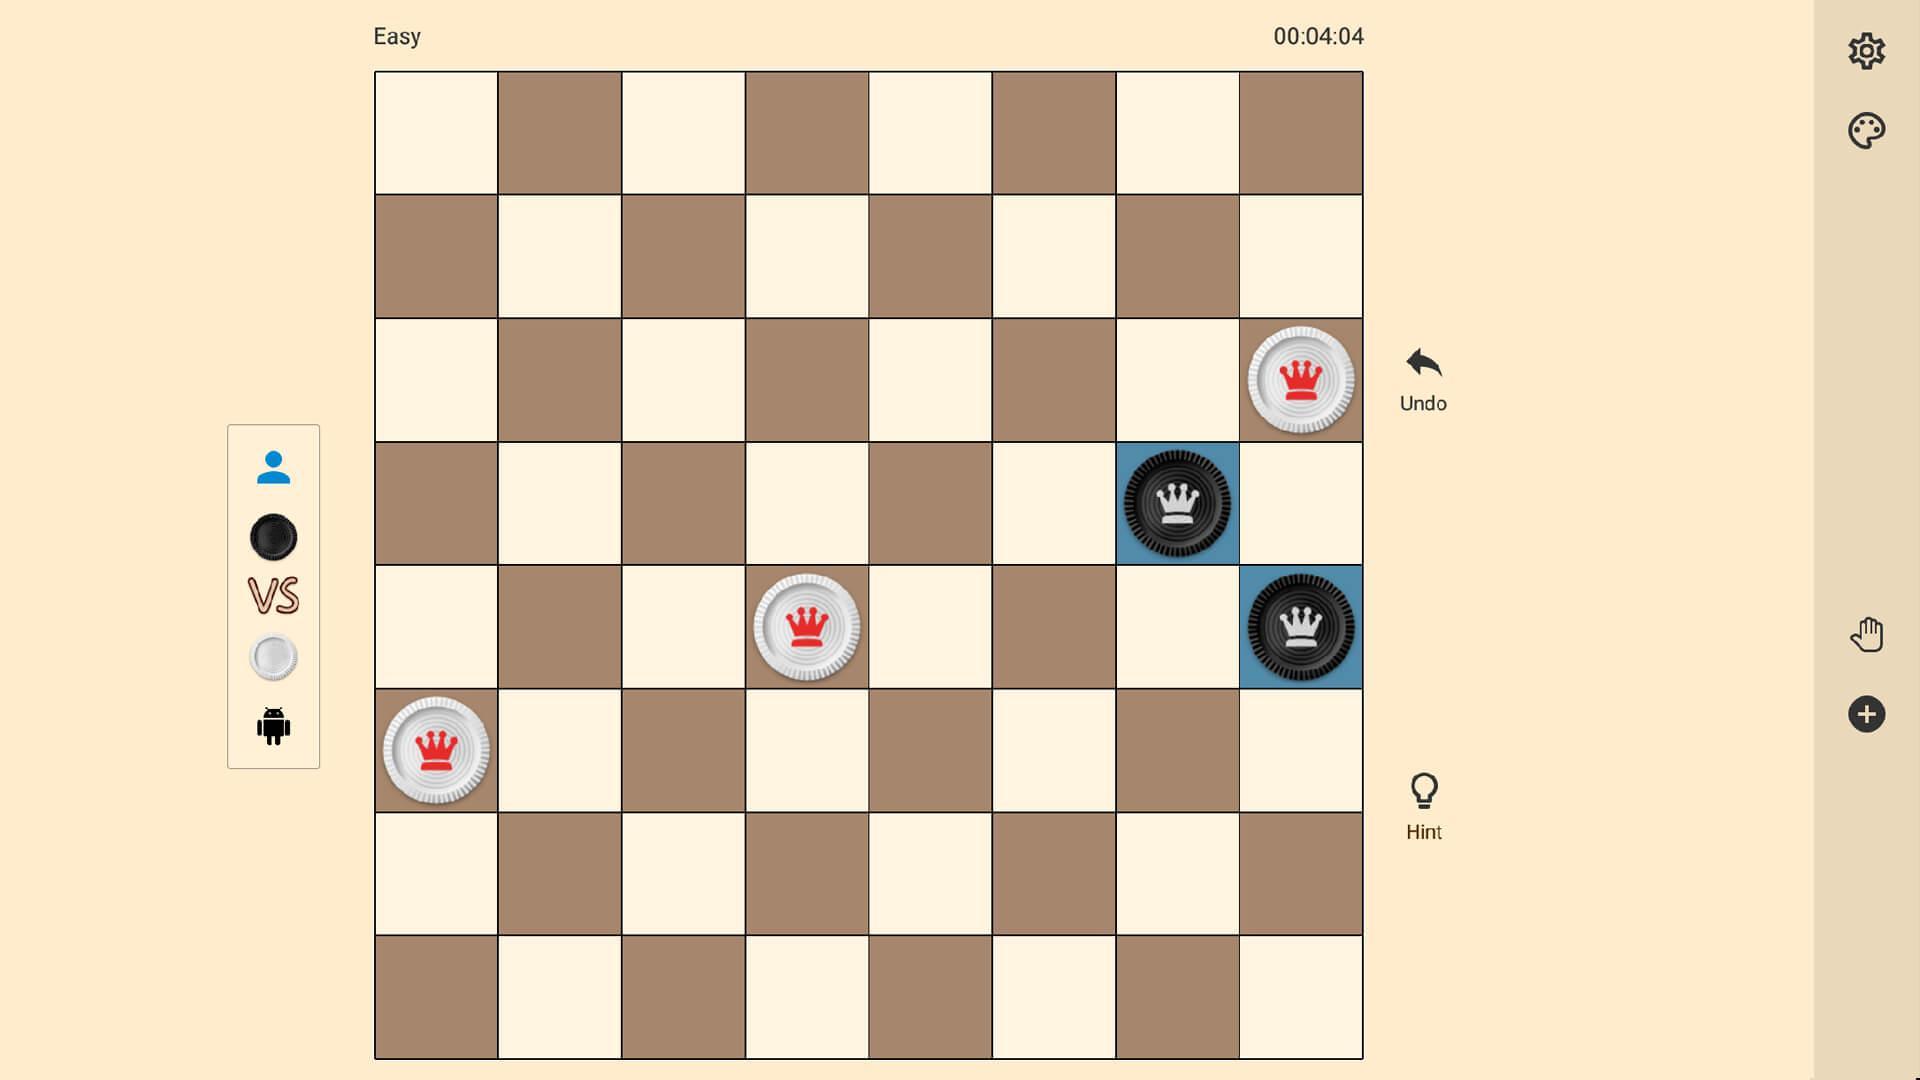 Checkers screenshot game